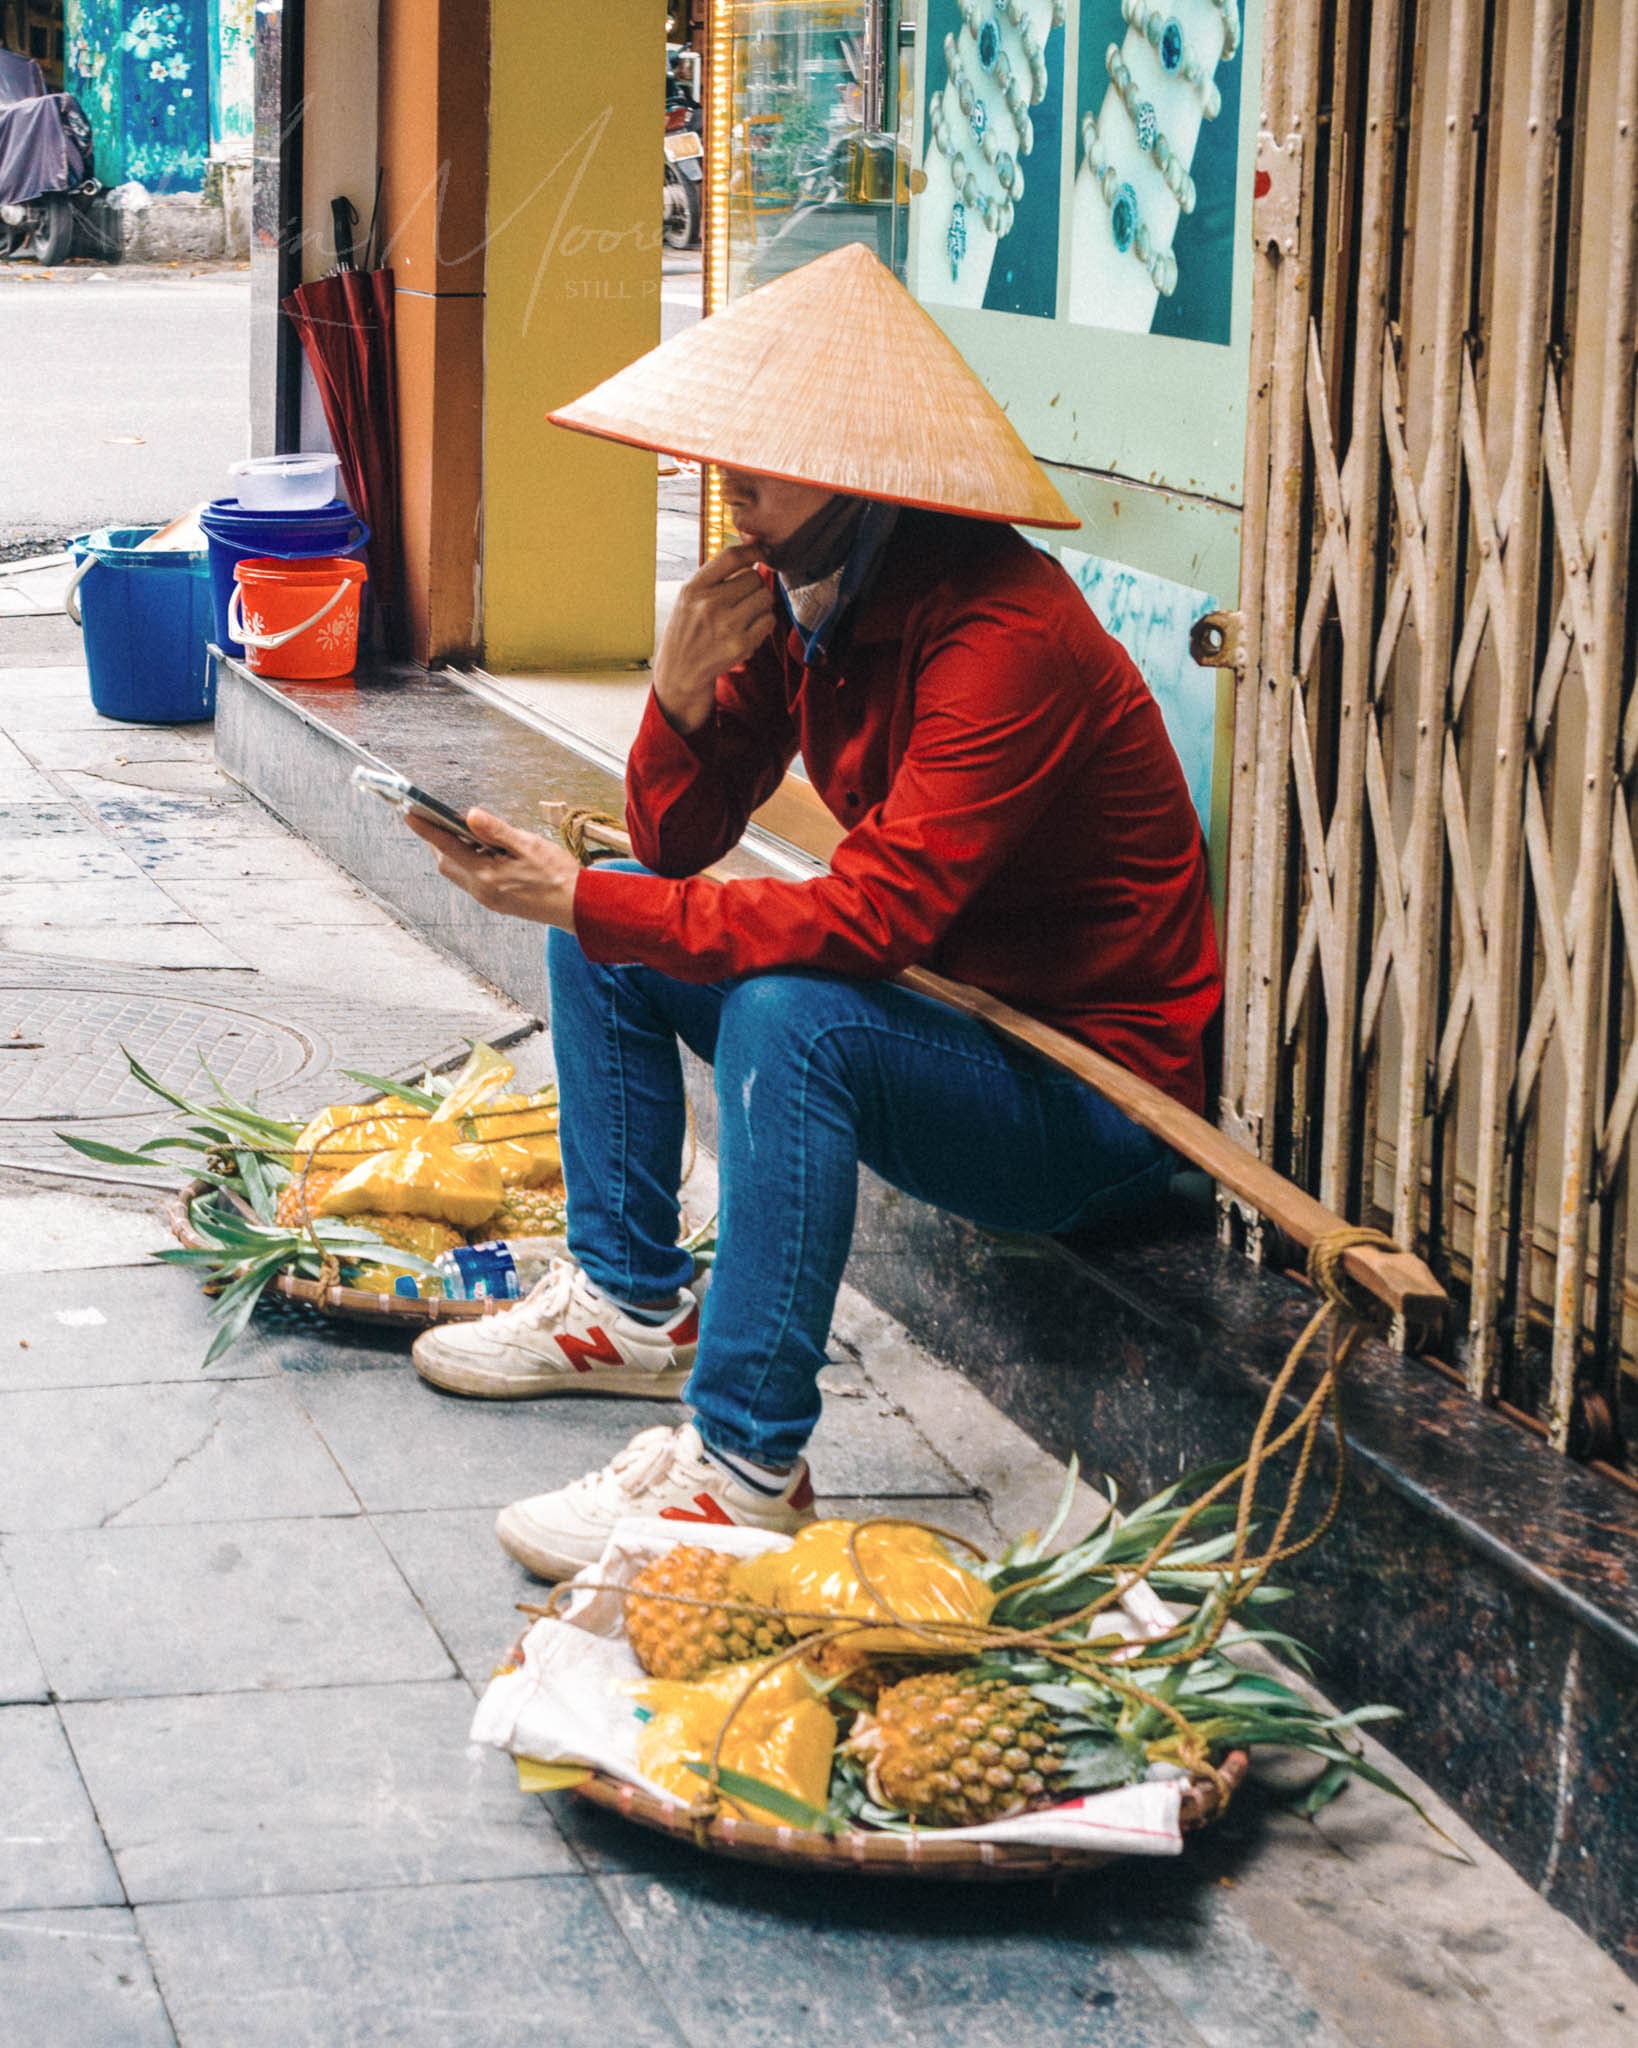 Street vendor in Hanoi Vietnam selling fresh pineapples, using smartphone during break.